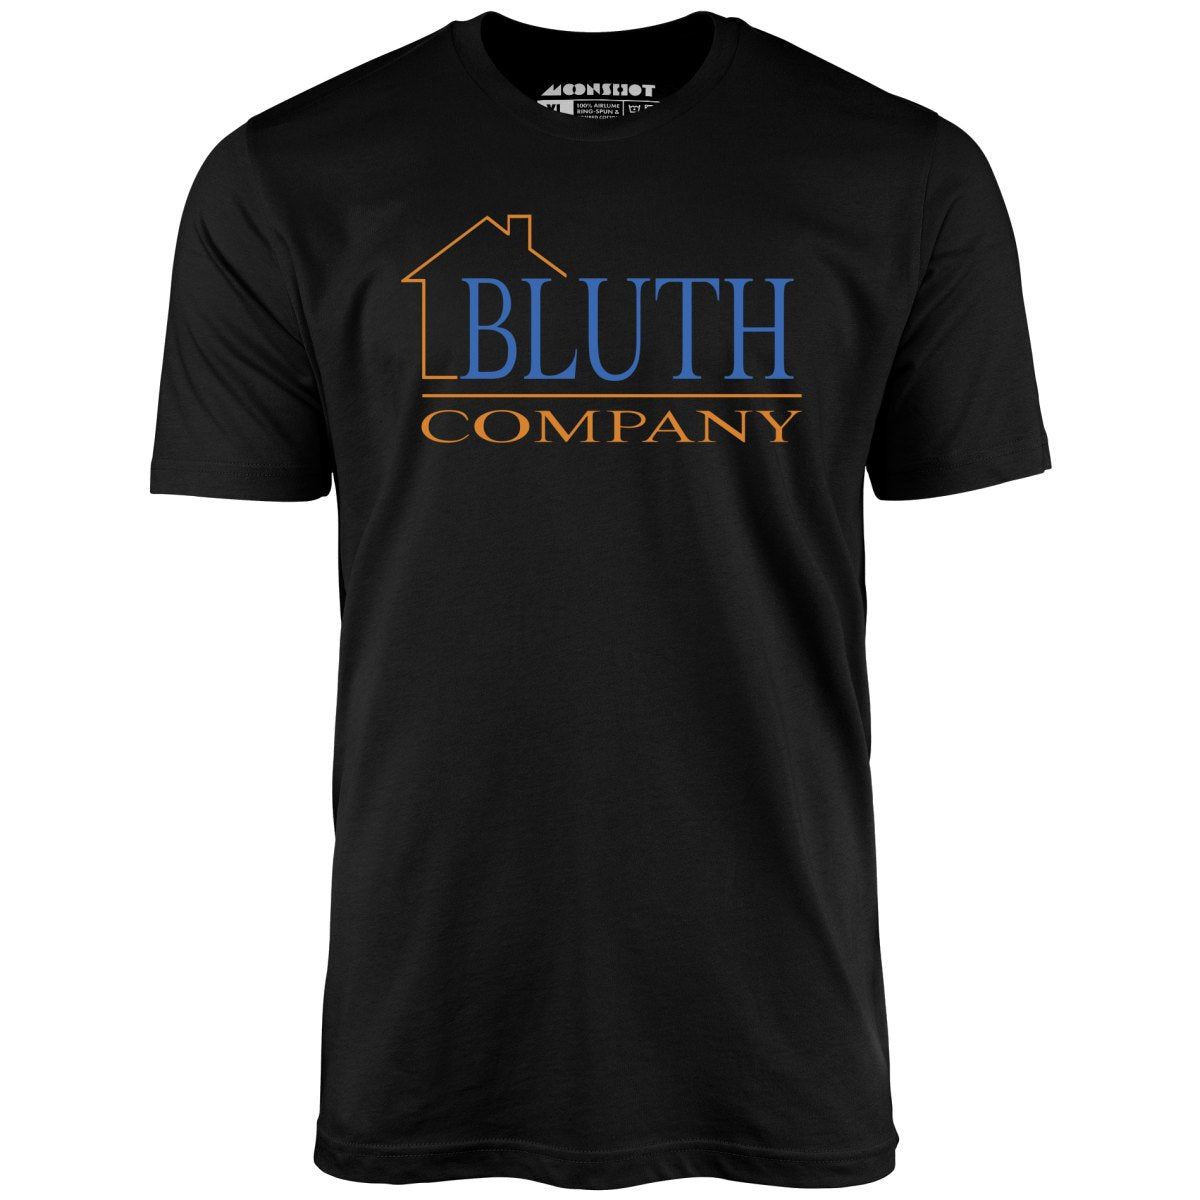 Bluth Company - Unisex T-Shirt